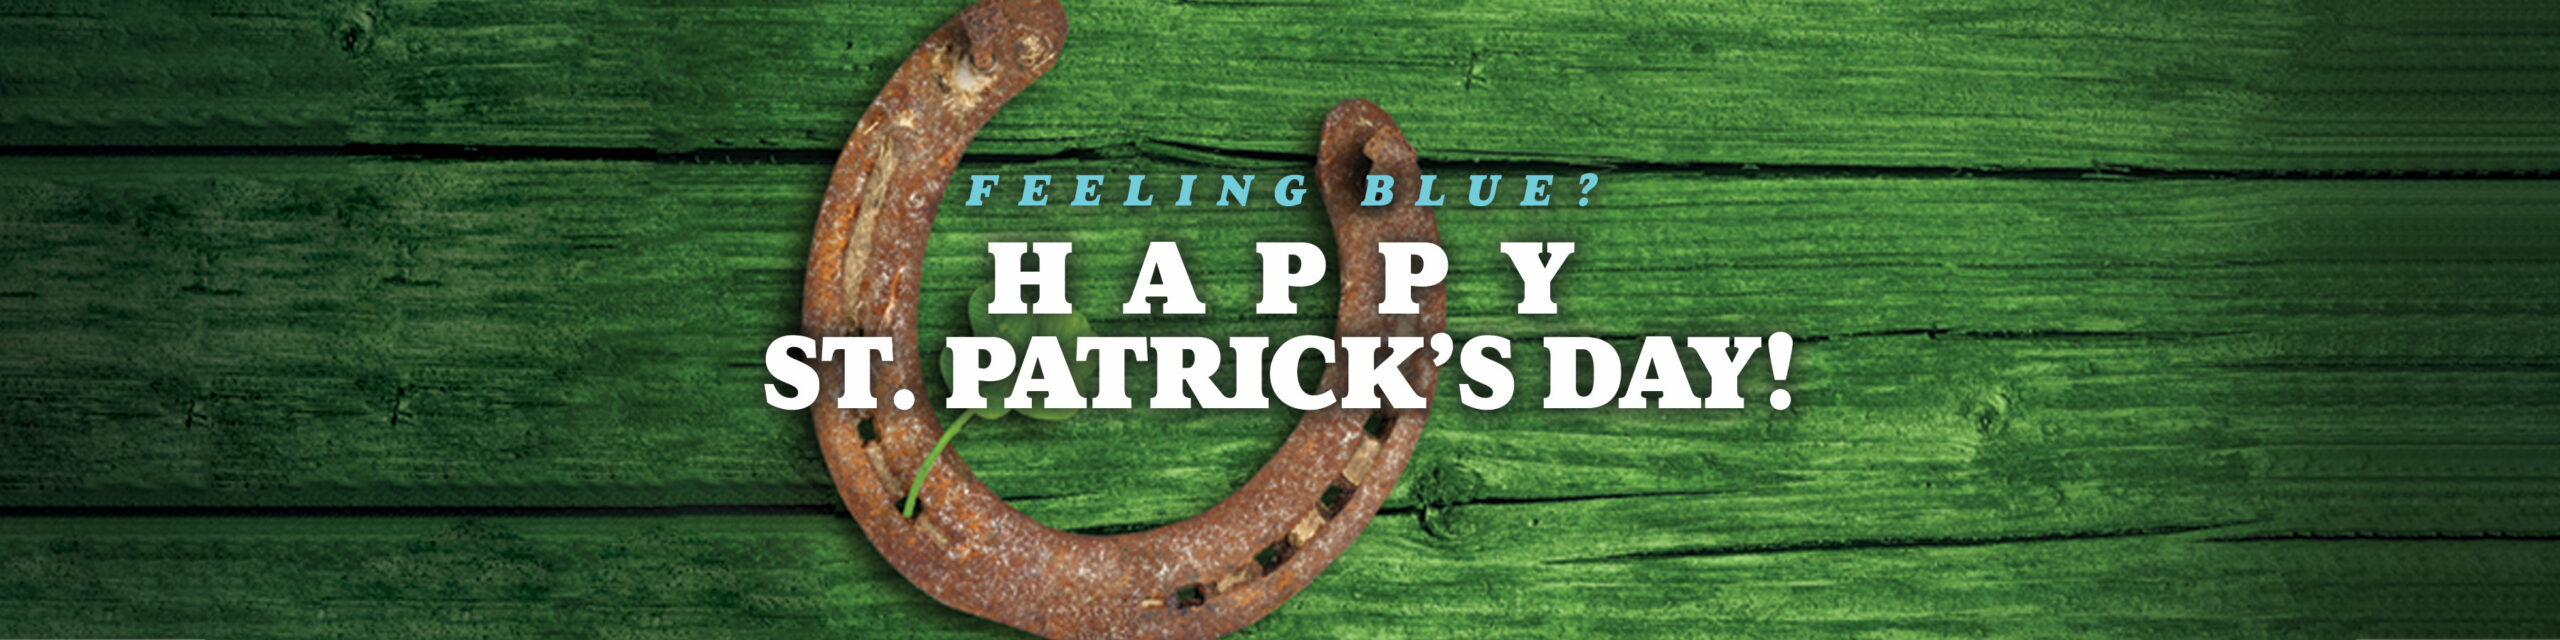 Feeling Blue? Happy St. Patrick's Day